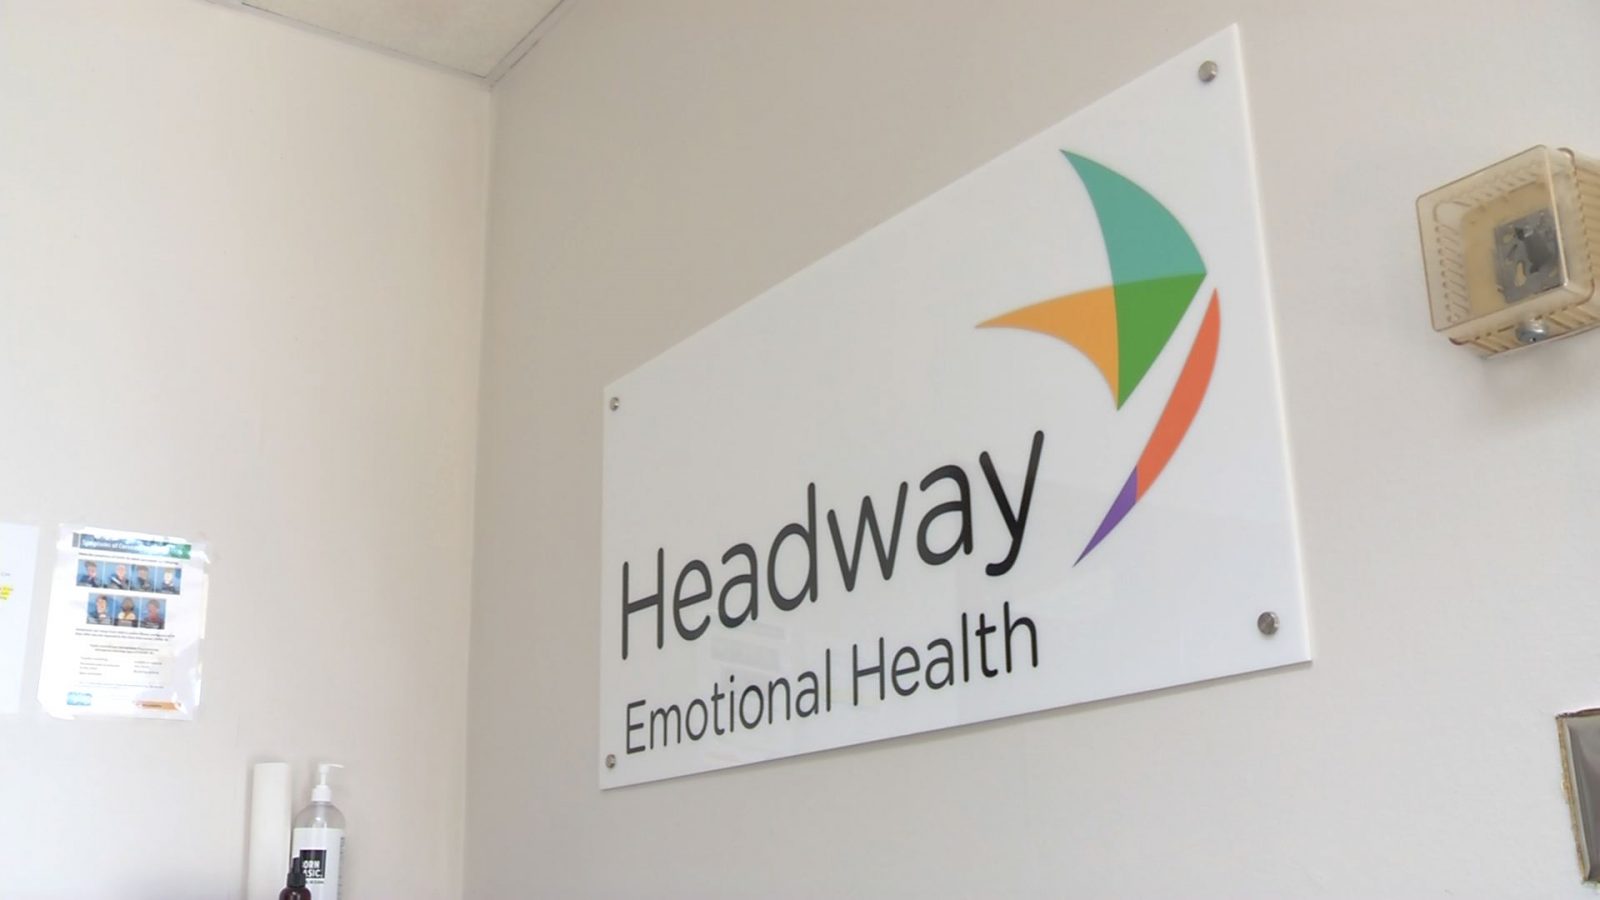 Brookyn Center Mental Health Facility Expands Capabilities - Ccx Media